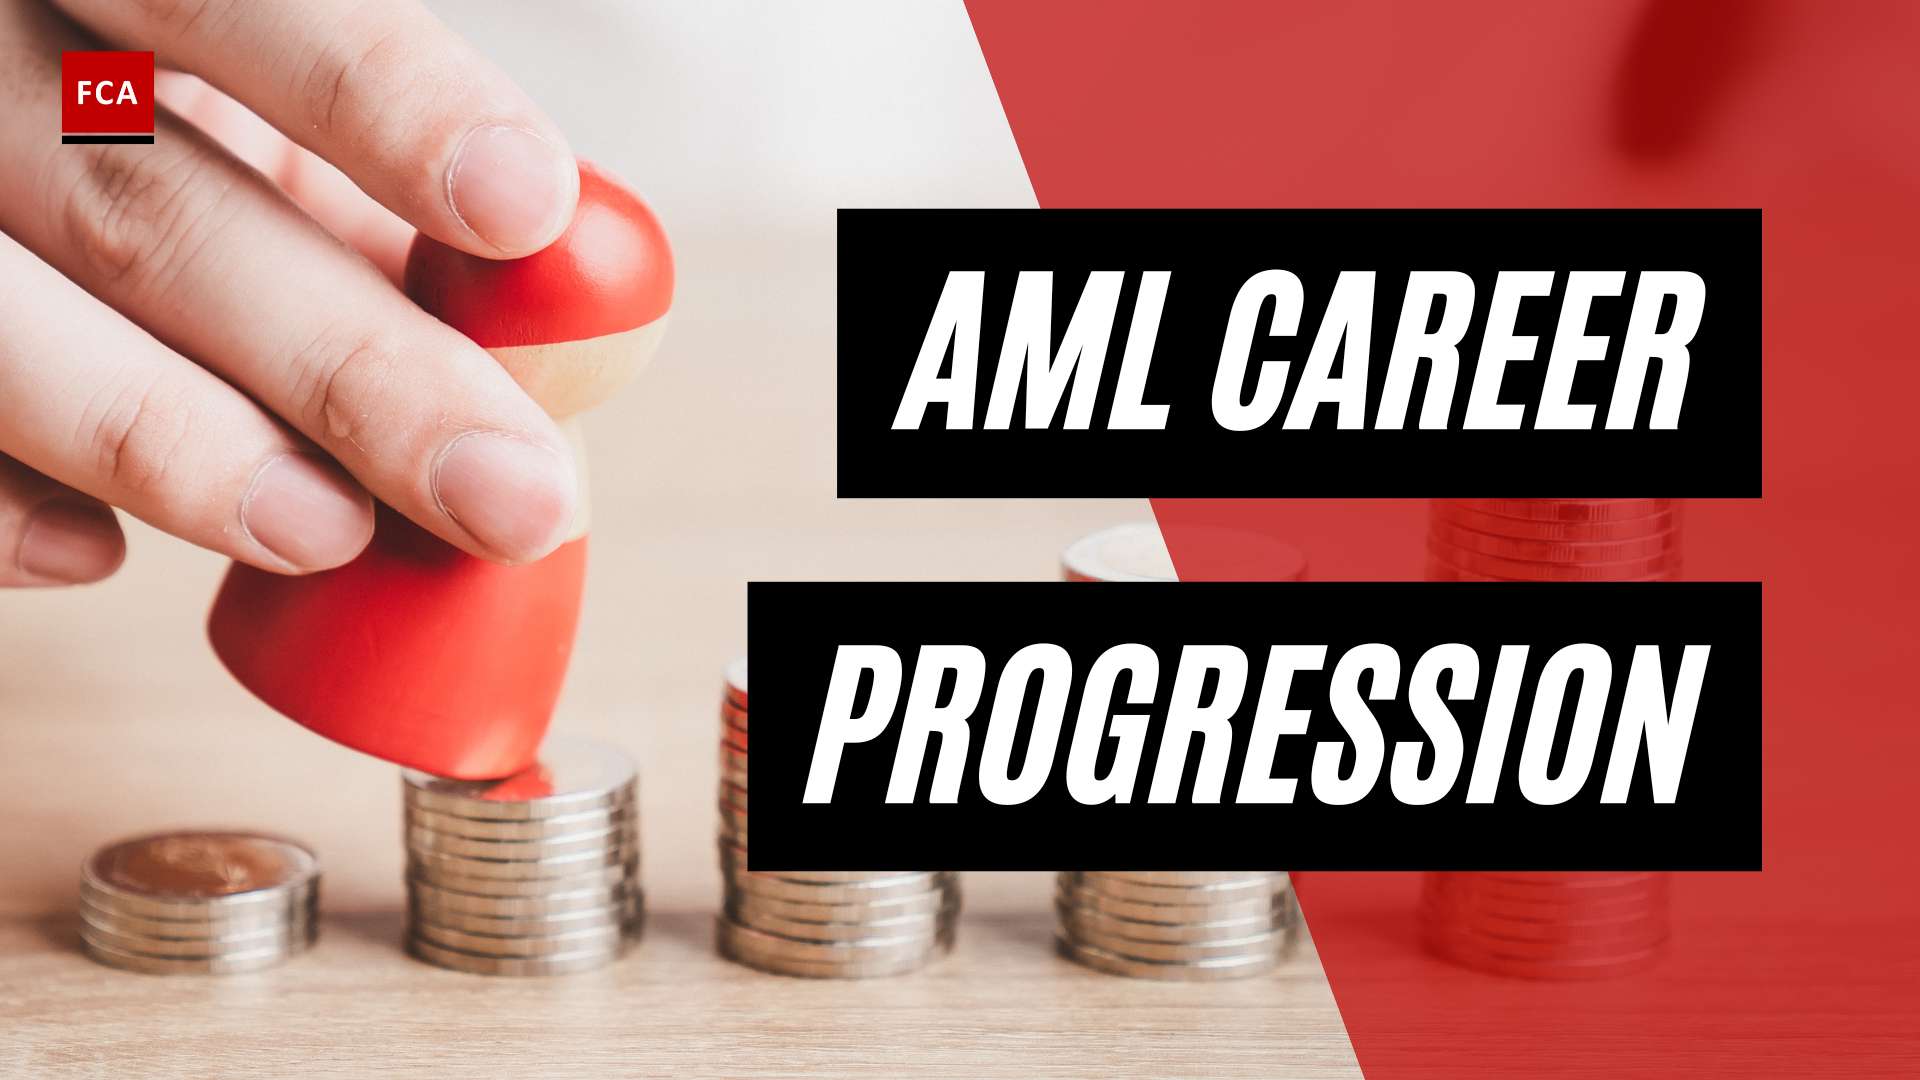 Mastering Aml: Advancing Your Career Through Progression